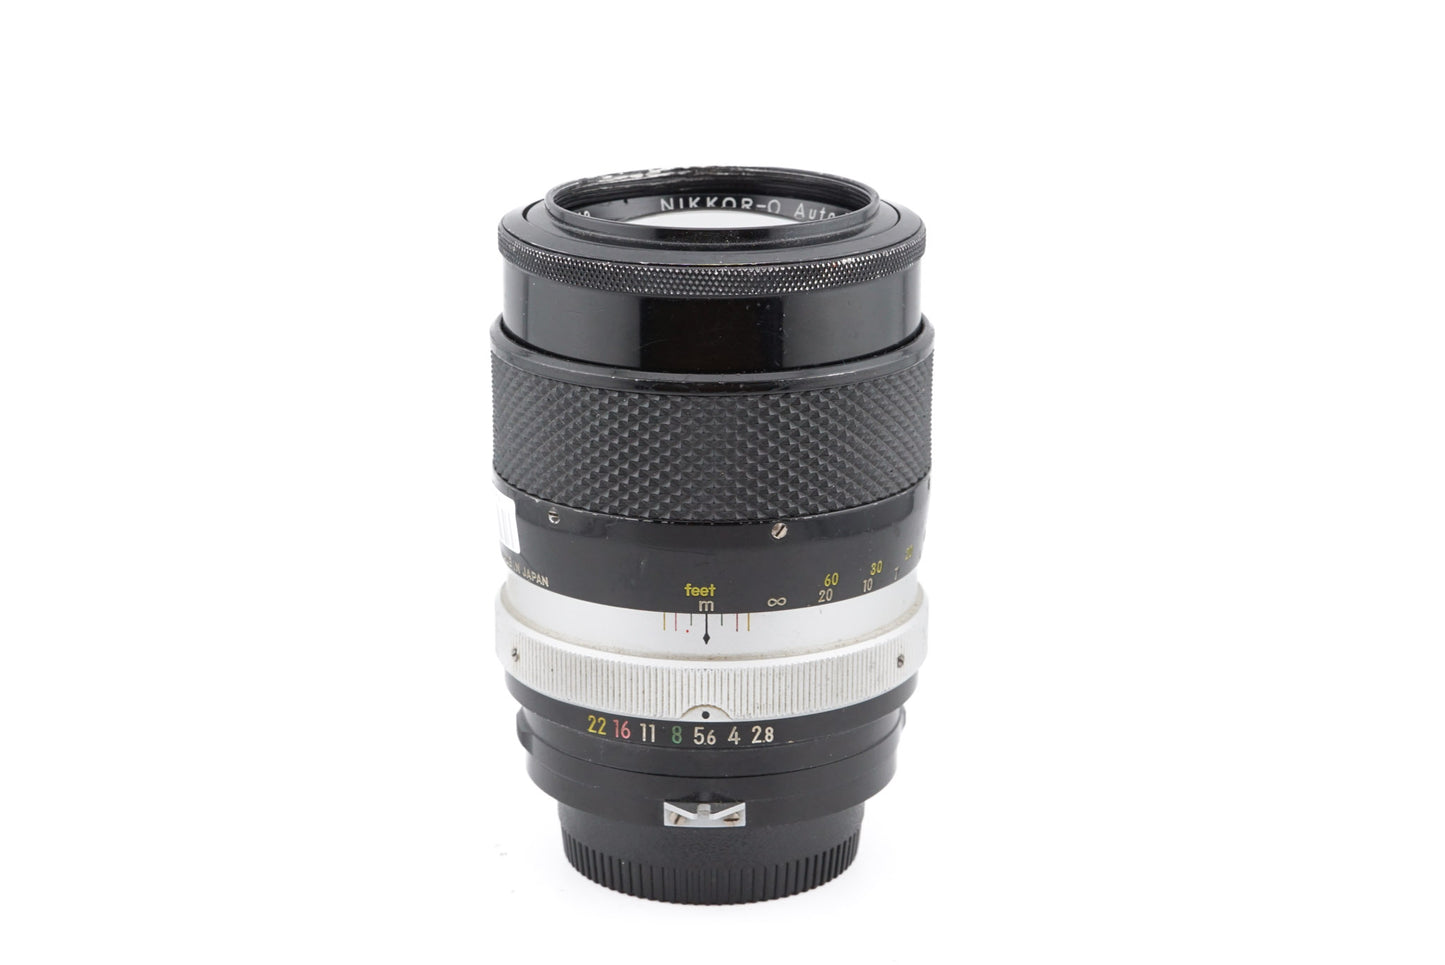 Nikon 135mm f2.8 Nikkor-Q Auto Pre-AI - Lens